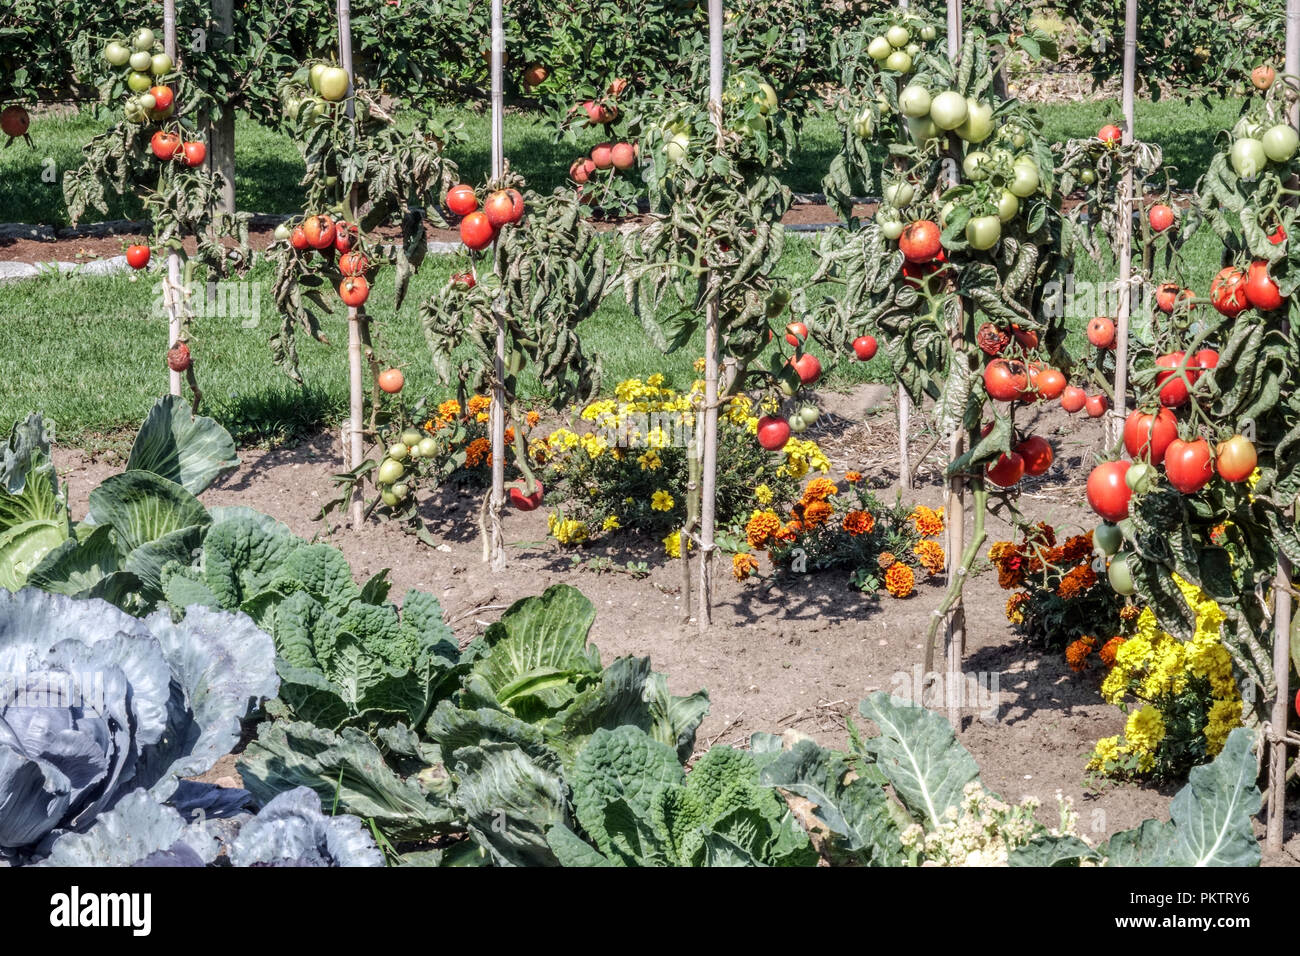 Tomatoes, Marigolds, Growing tomato plant on vine vegetable garden Stock Photo